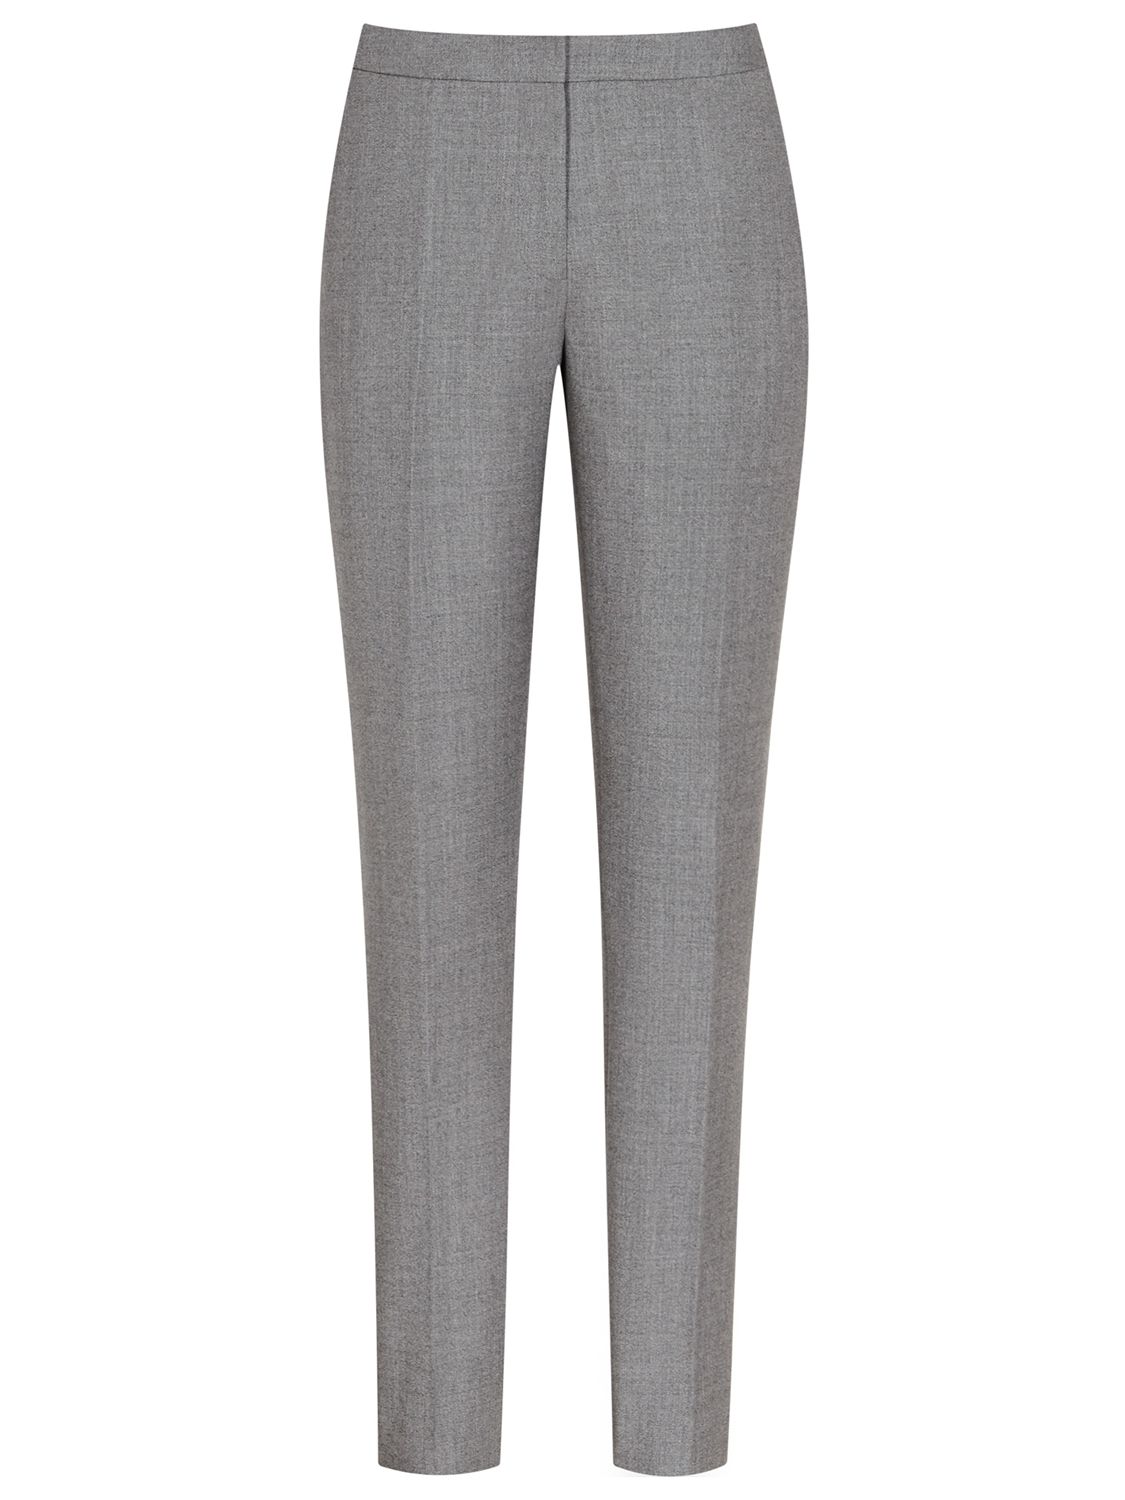 Reiss Austin Slim Leg Tailored Trousers, Grey